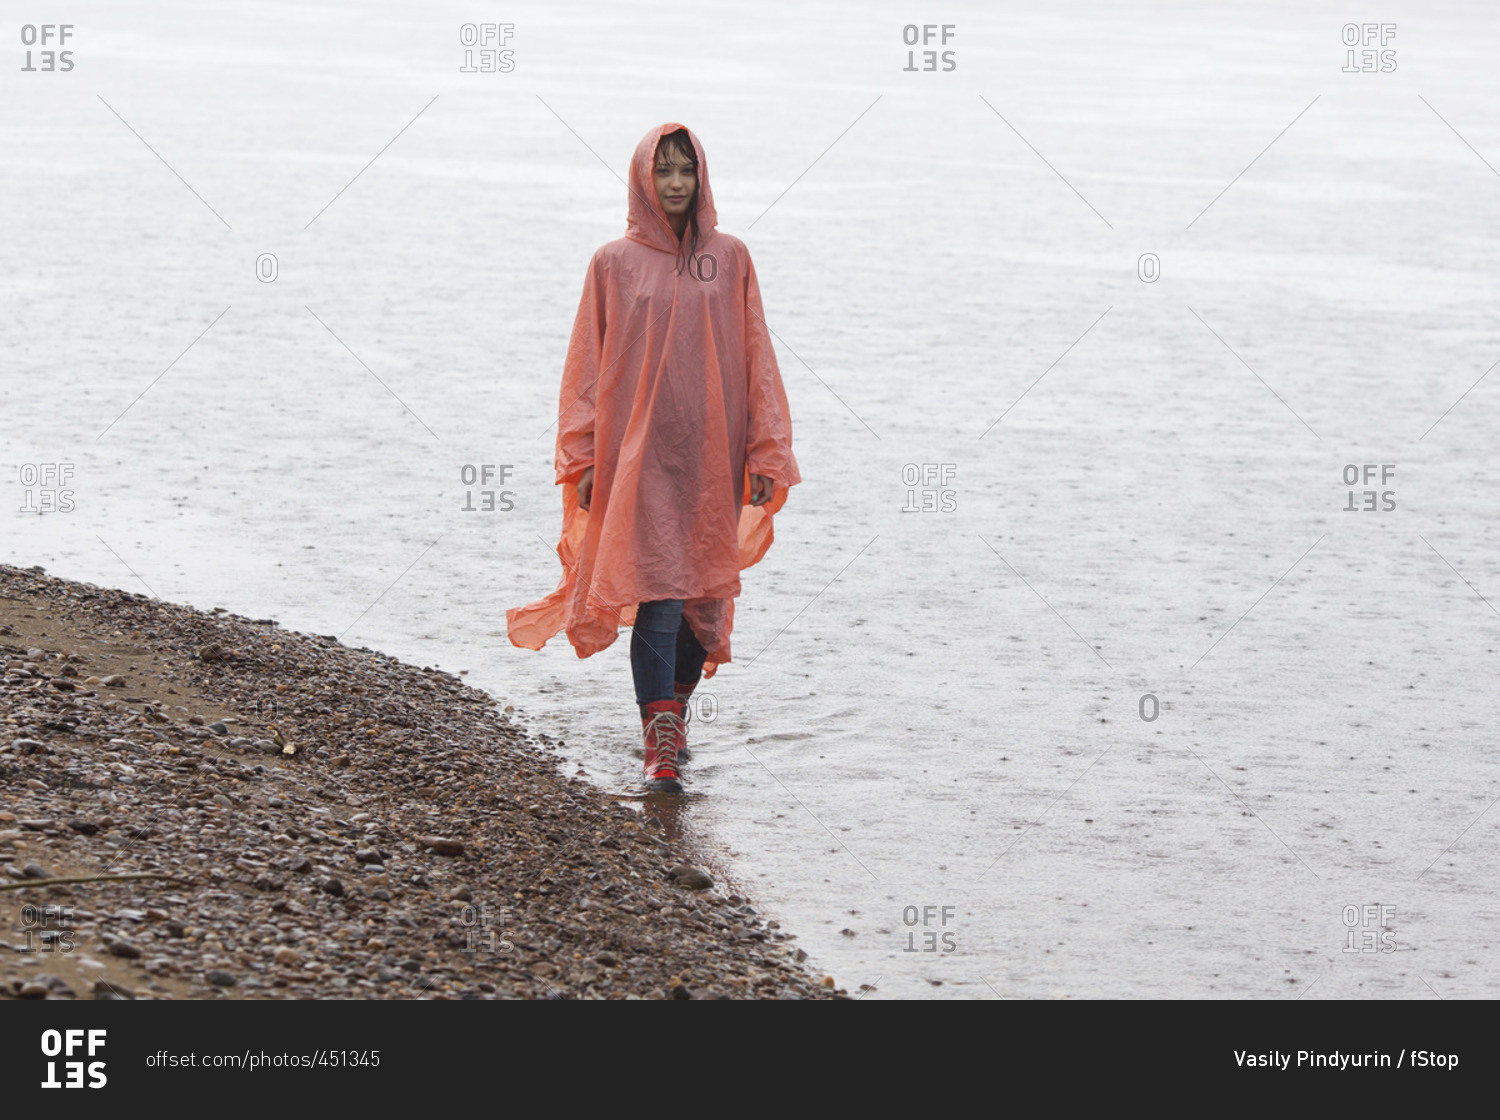 Woman wearing raincoat walking at lakeshore during rainy season